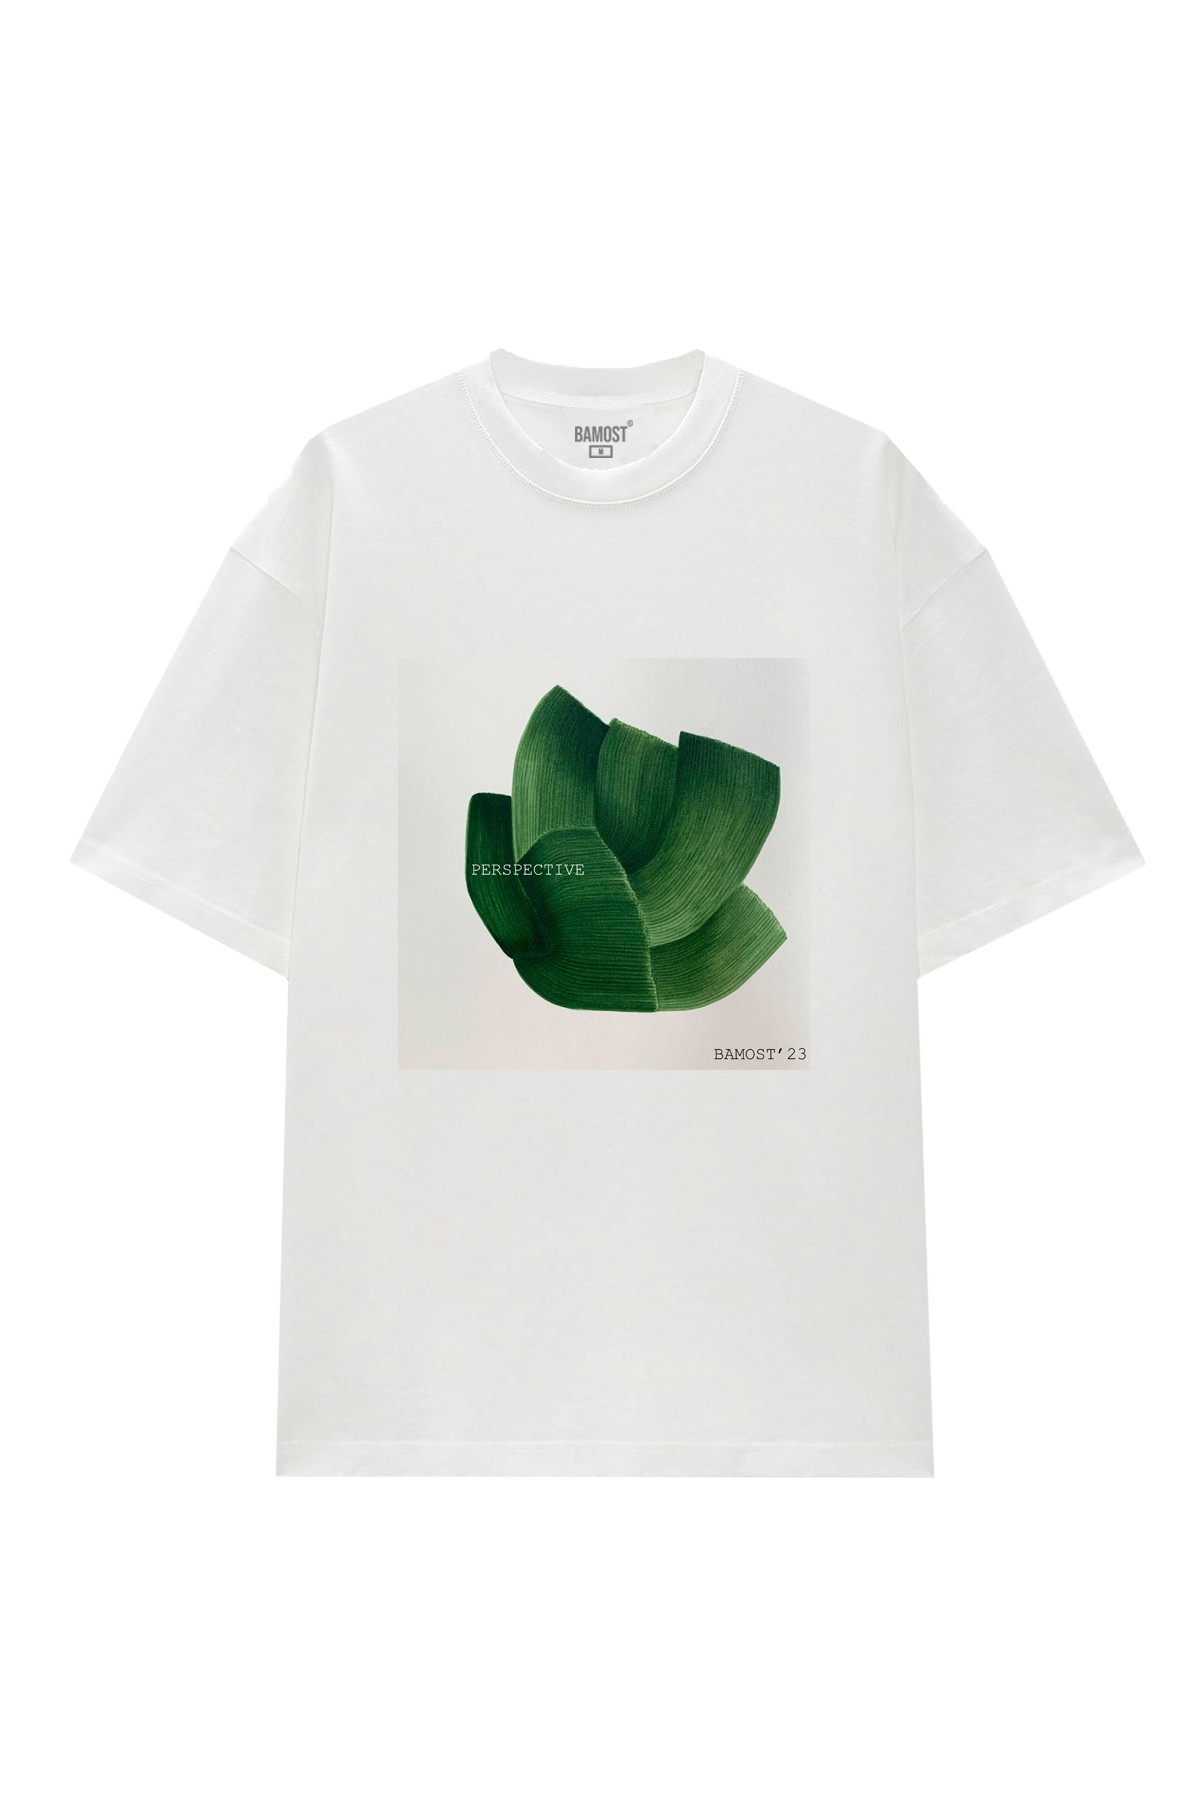 Perspective'4 - Unisex Oversize T-Shirt - BEYAZ